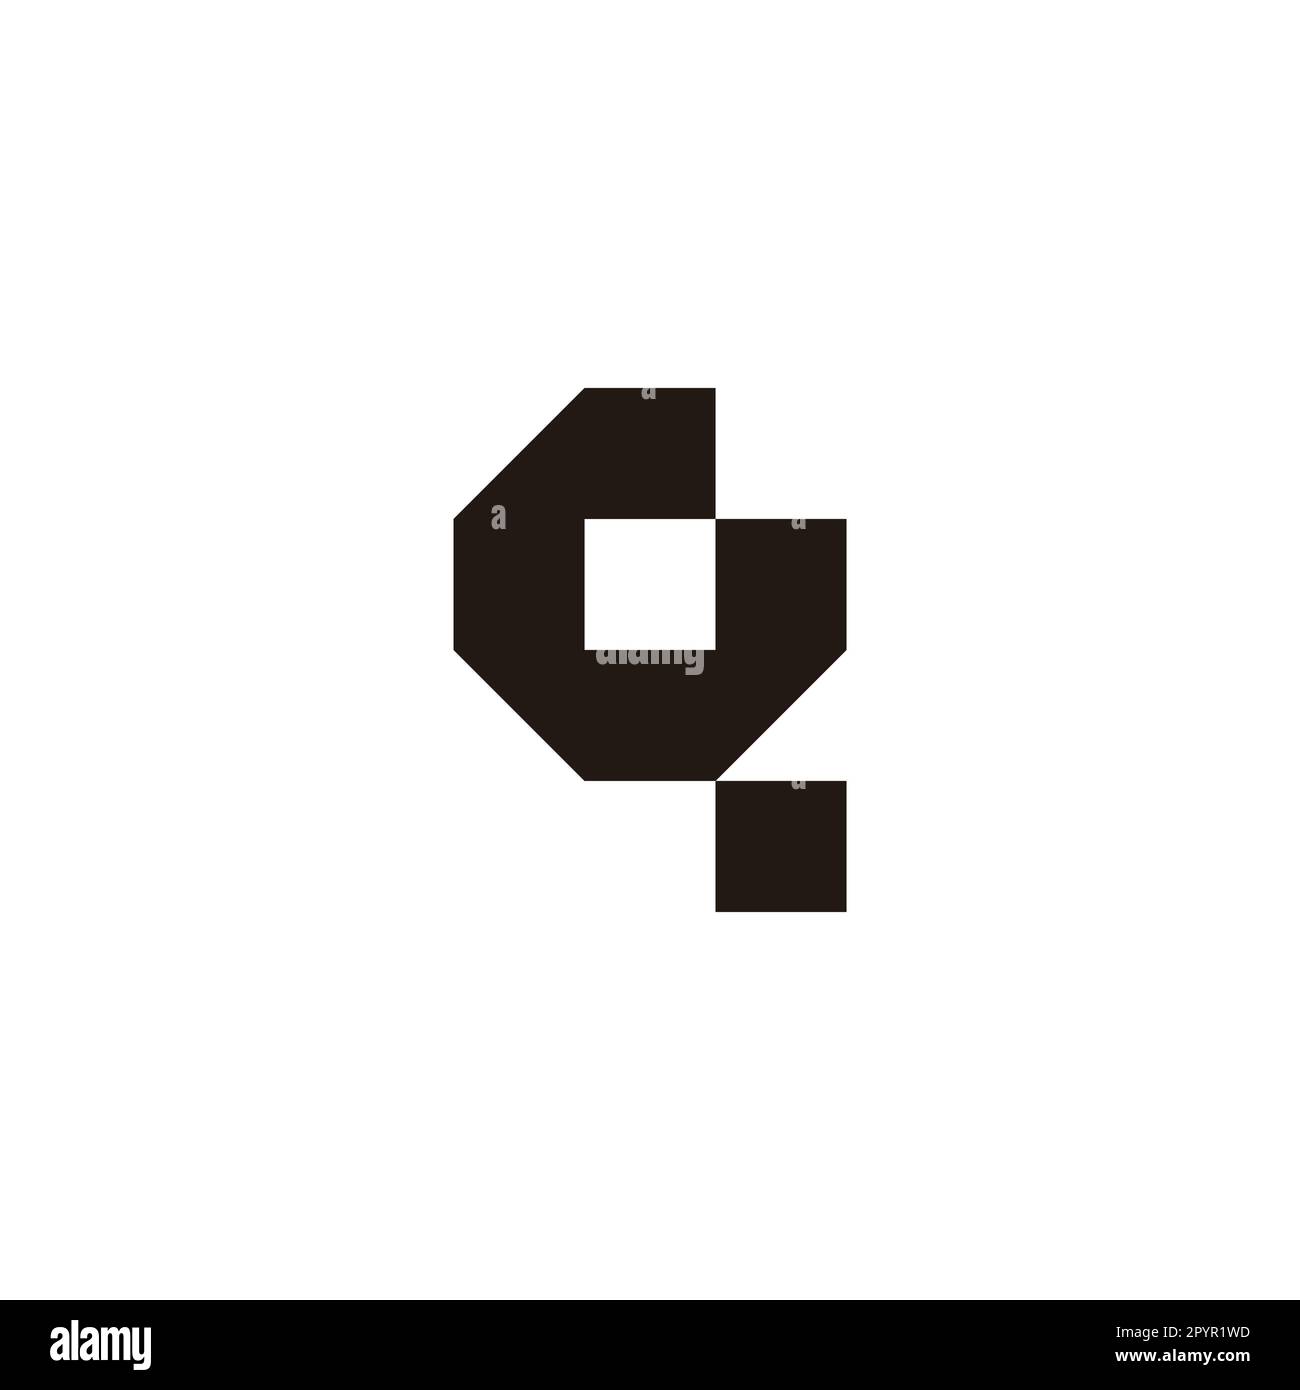 Letter Gq qG G q square geometric symbol simple logo vector Stock Vector